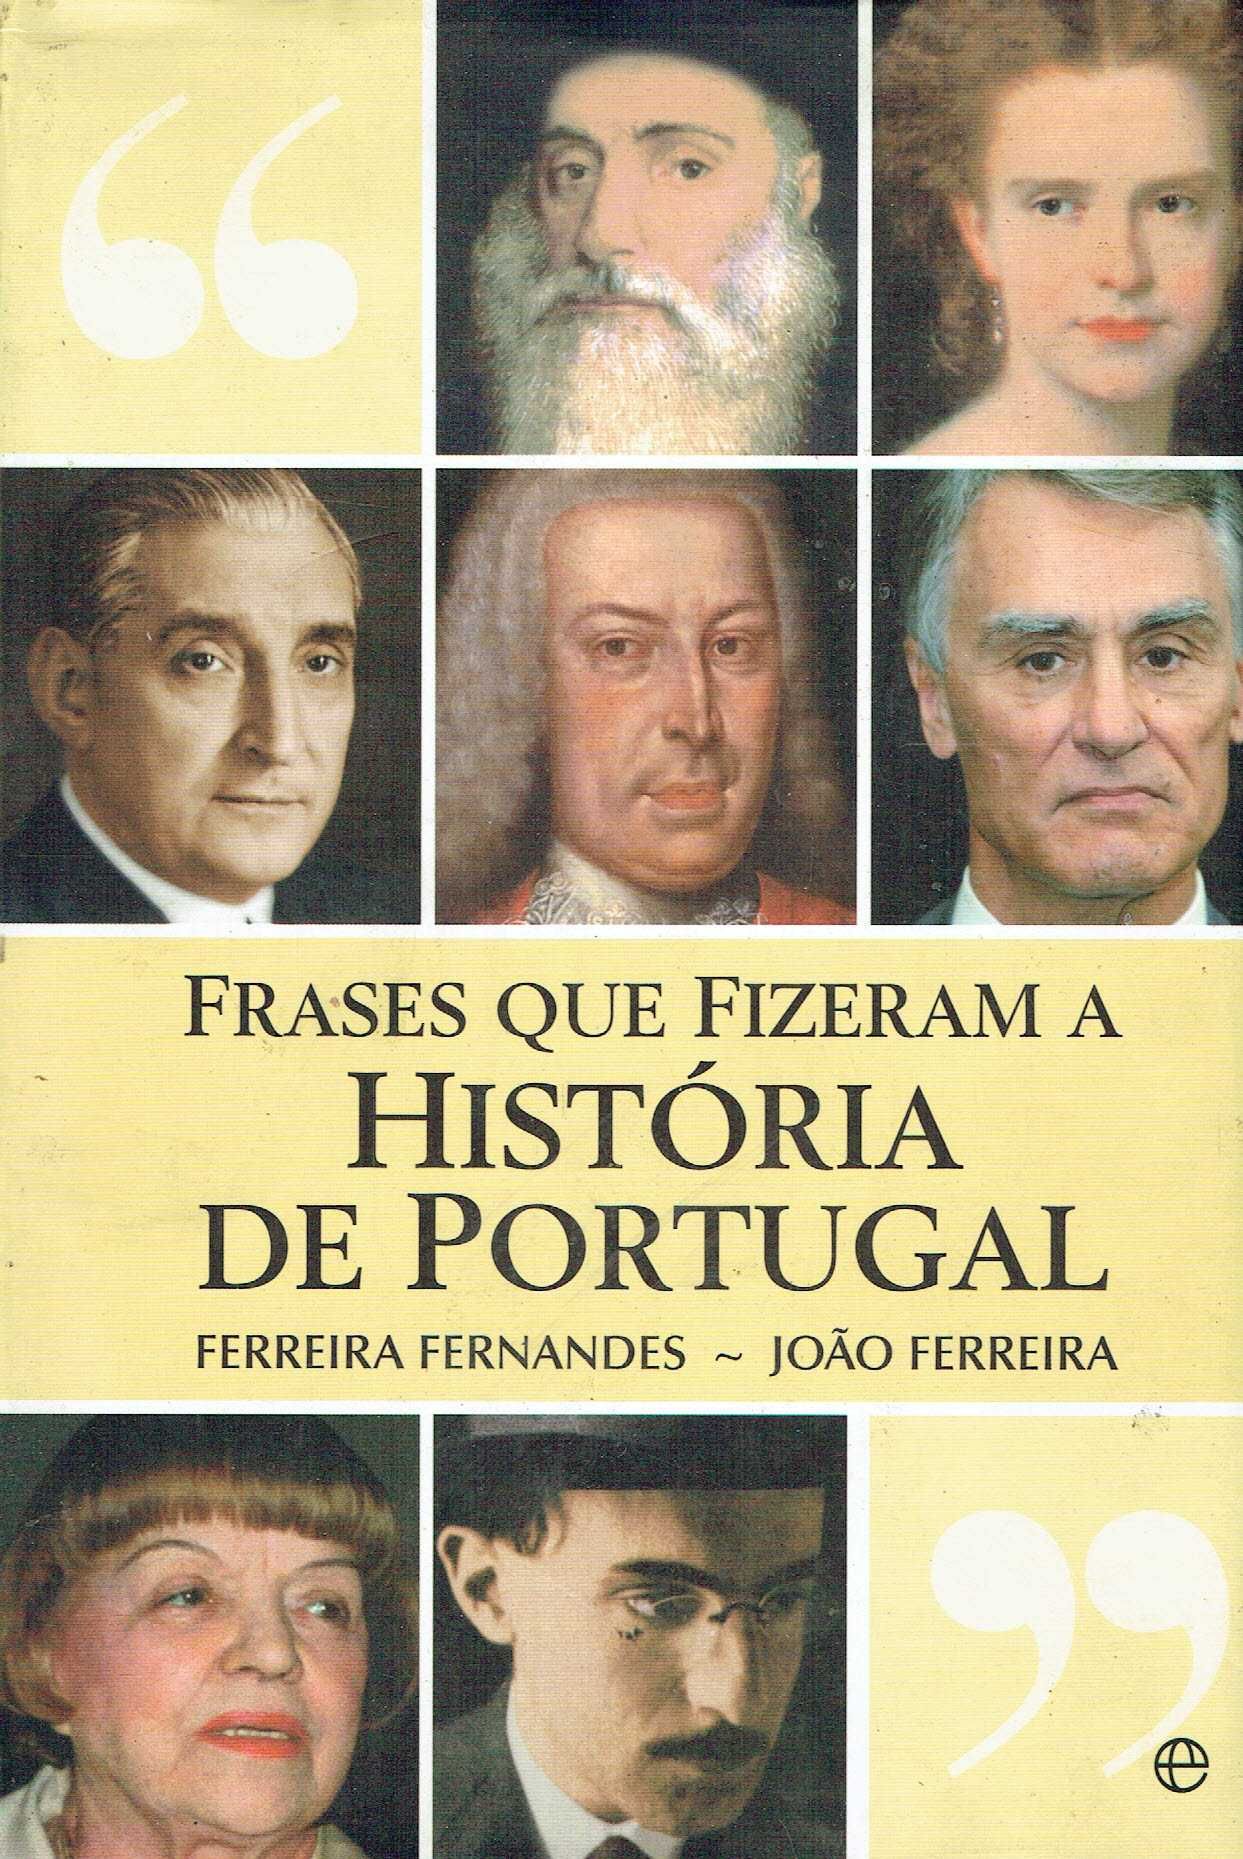 14700

Frases Que Fizeram a Historia de Portugal